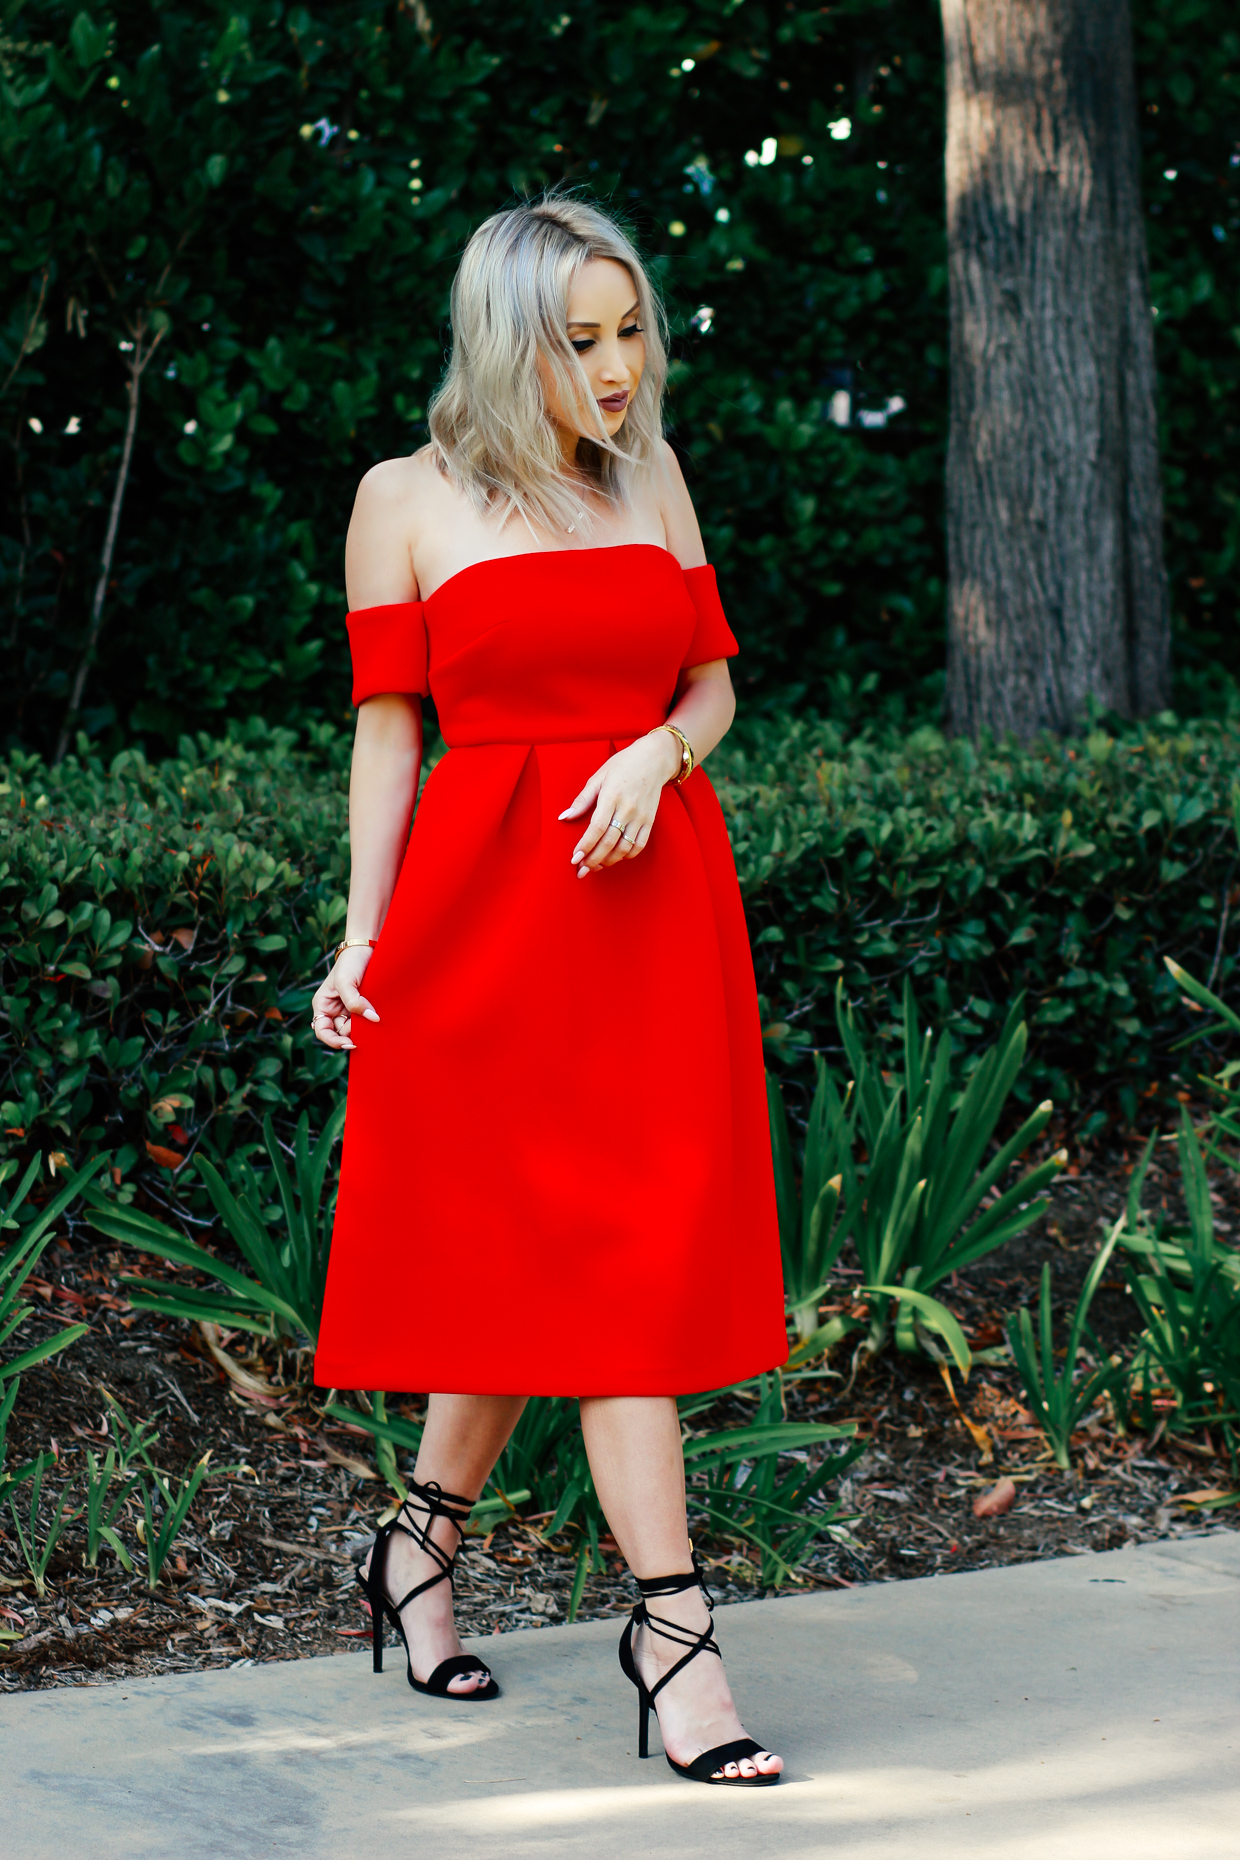 Blondie in the City | Chic Red Dress | Elegant Red Dress | @makemechic